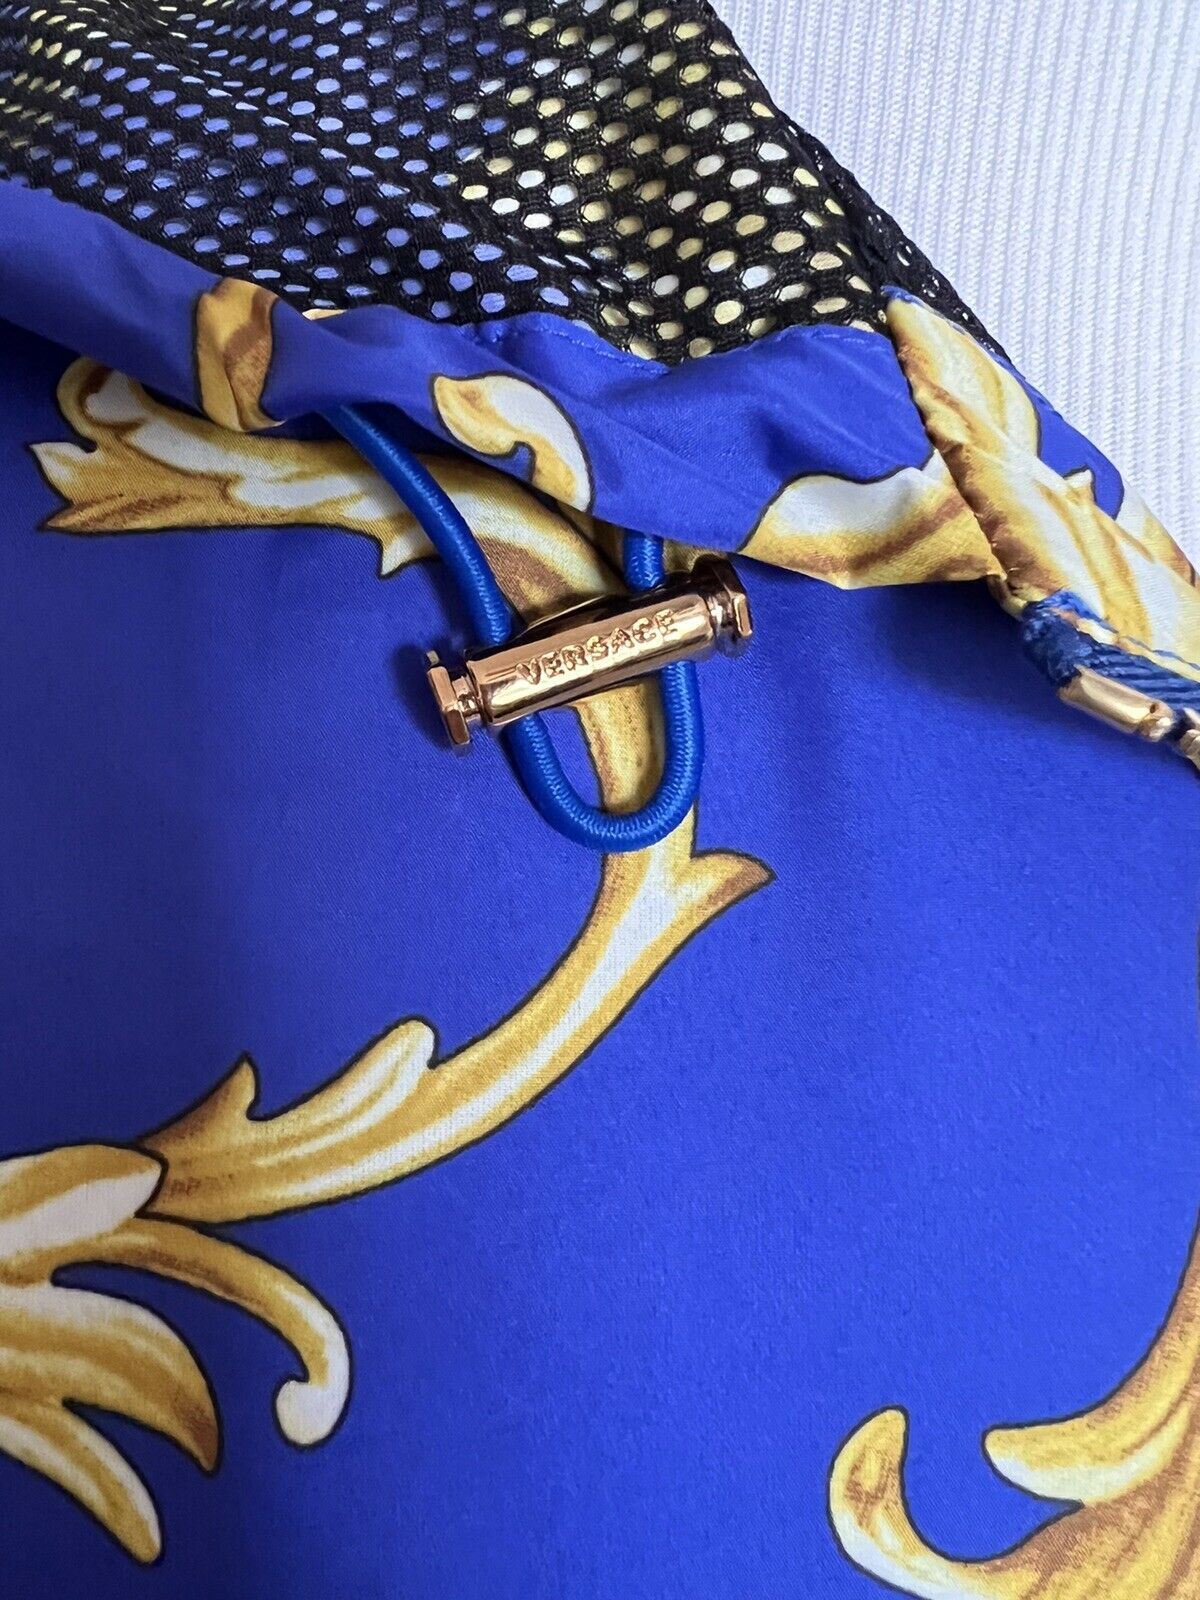 NWT $1100 Versace Men's Barocco Intante Hooded Jacket Windbreaker Blue 54 US